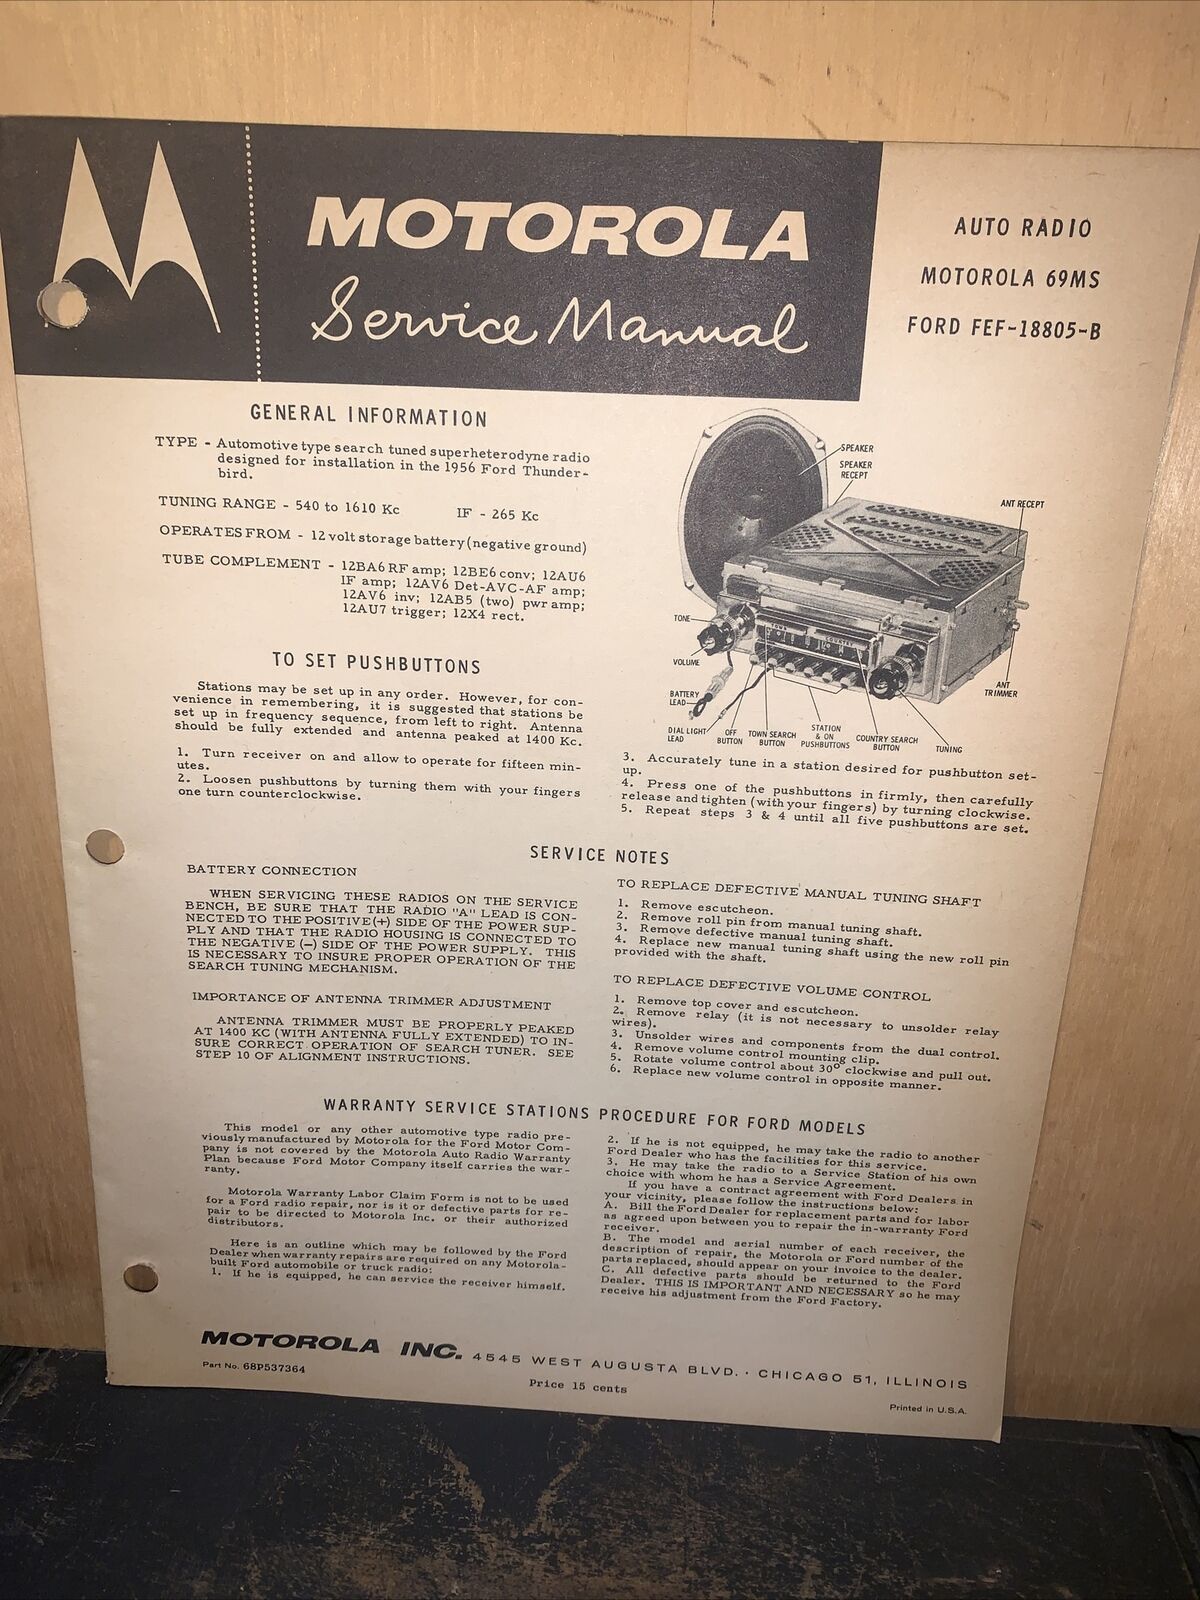 Motorola Auto Radio Model 69MS,Ford FEF-18805-B -Service Manual- Schematics